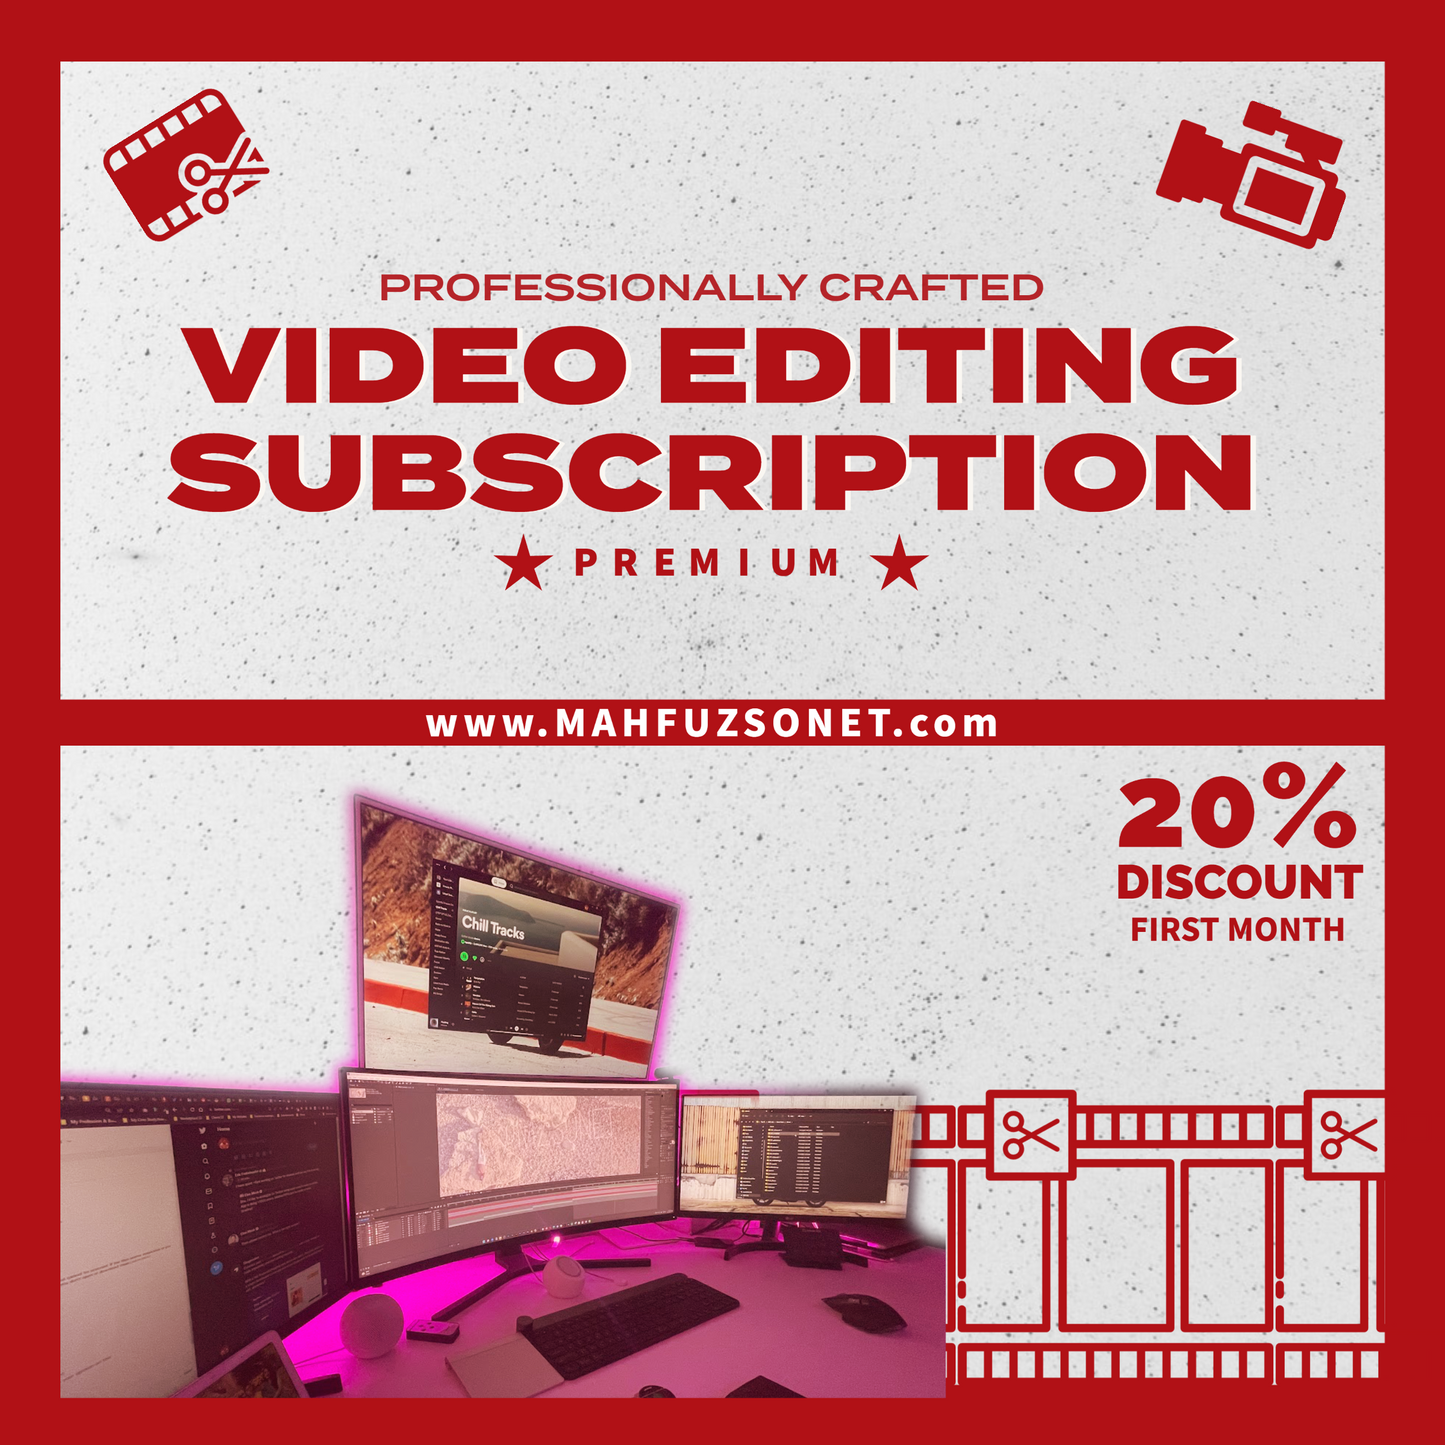 Mahfuz-sonet-freelance-video-editing-premium-subscription-service